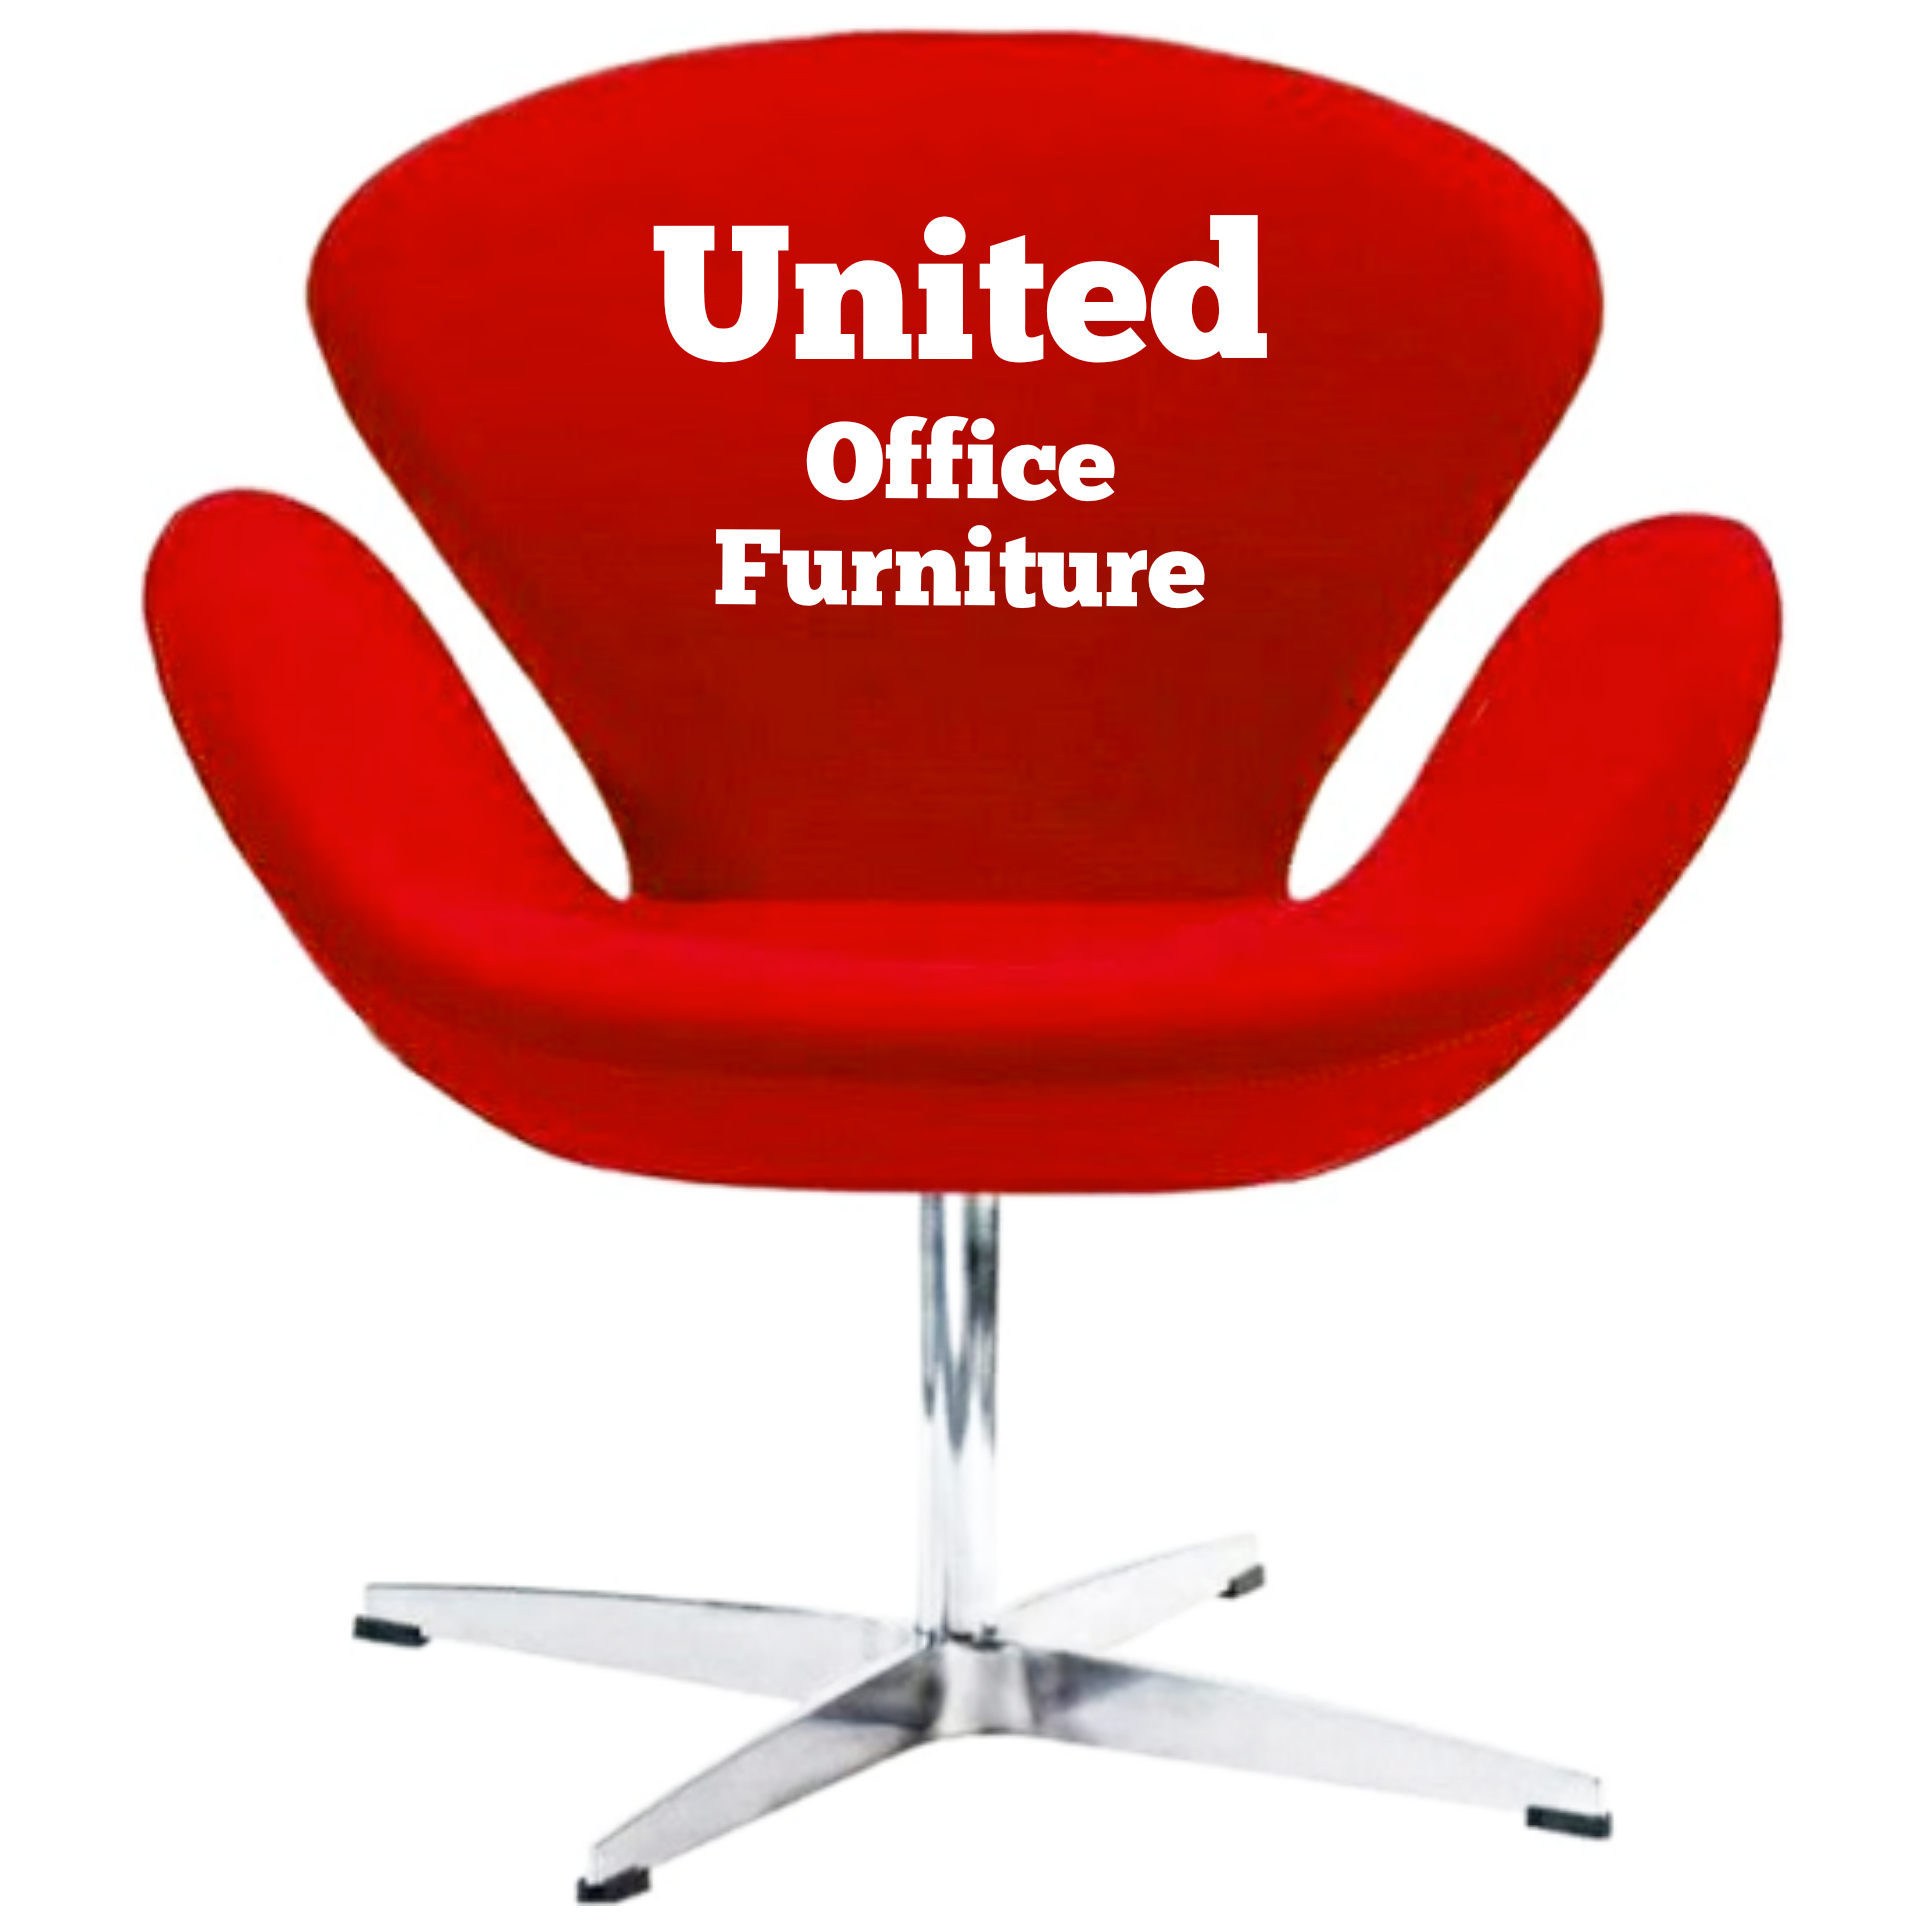 United office furniture